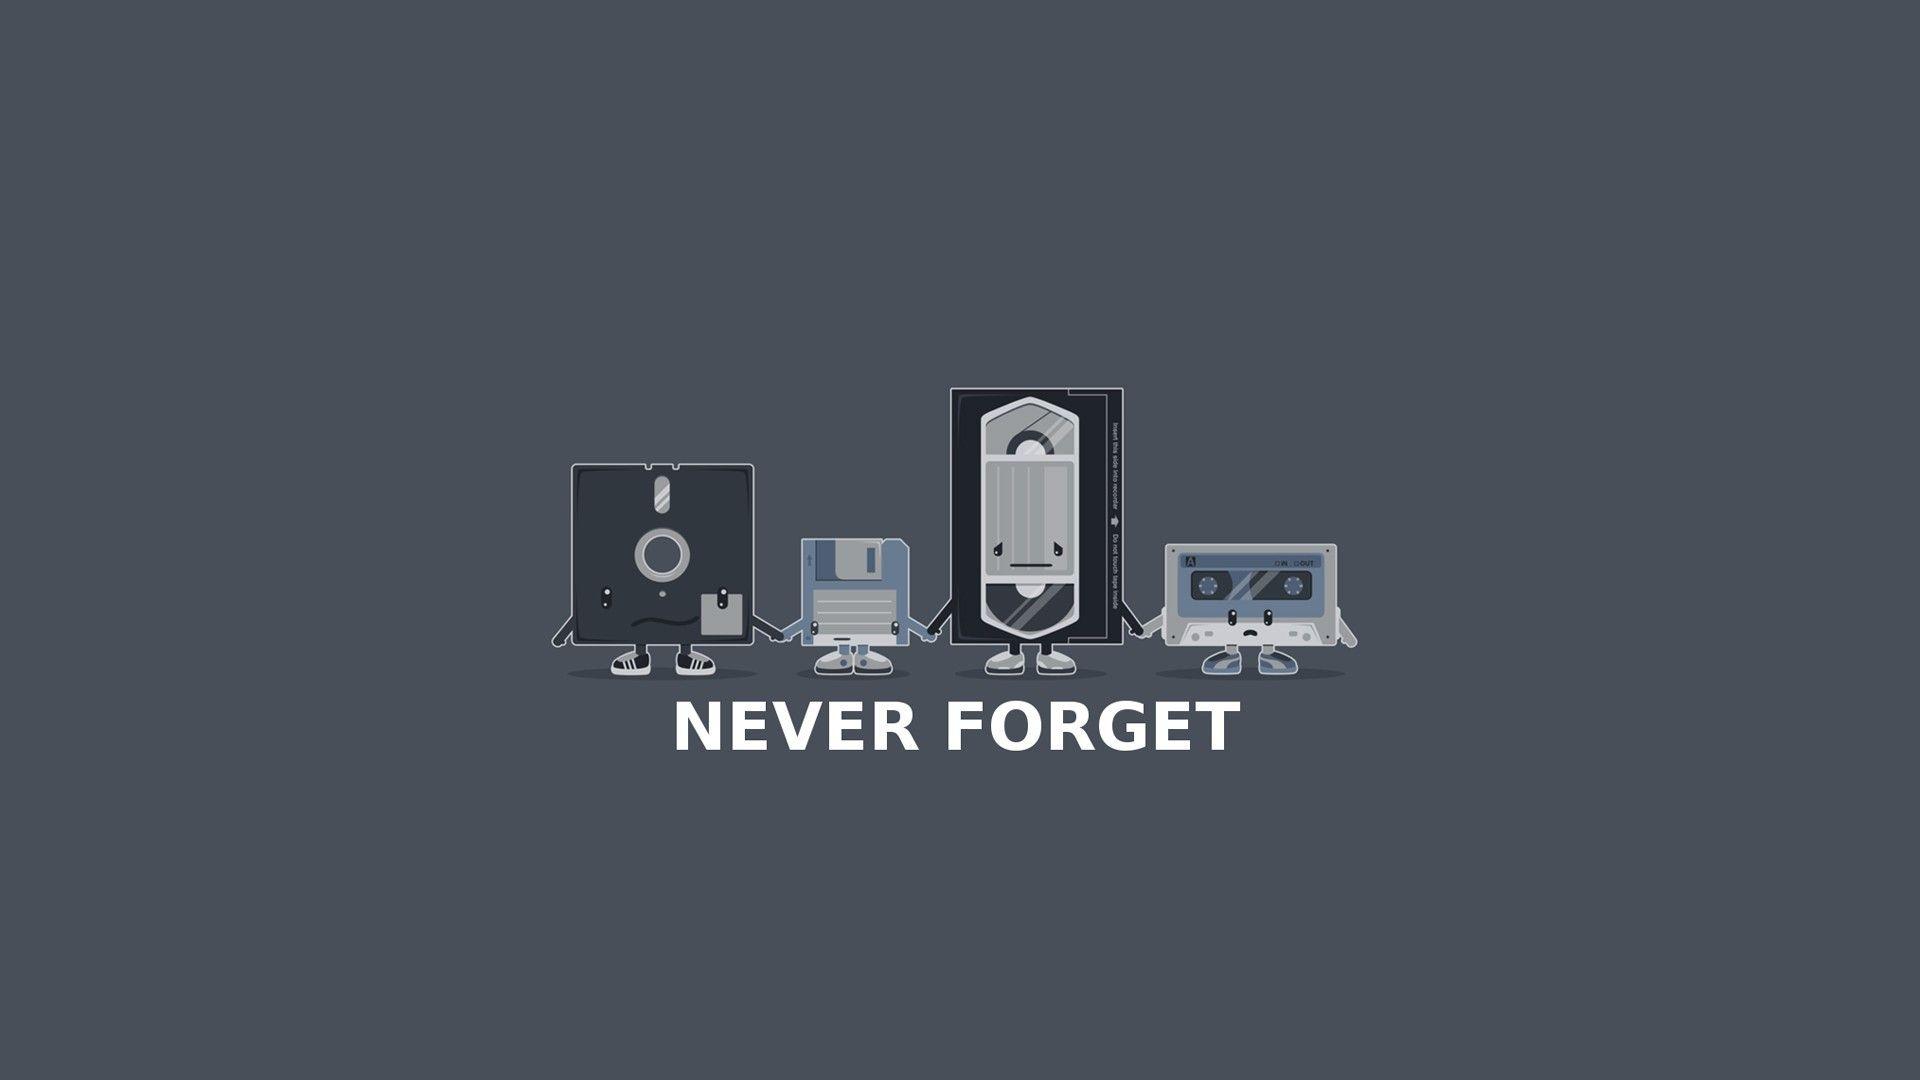 text, cassette, never forget, floppy disks, grey background, vhs